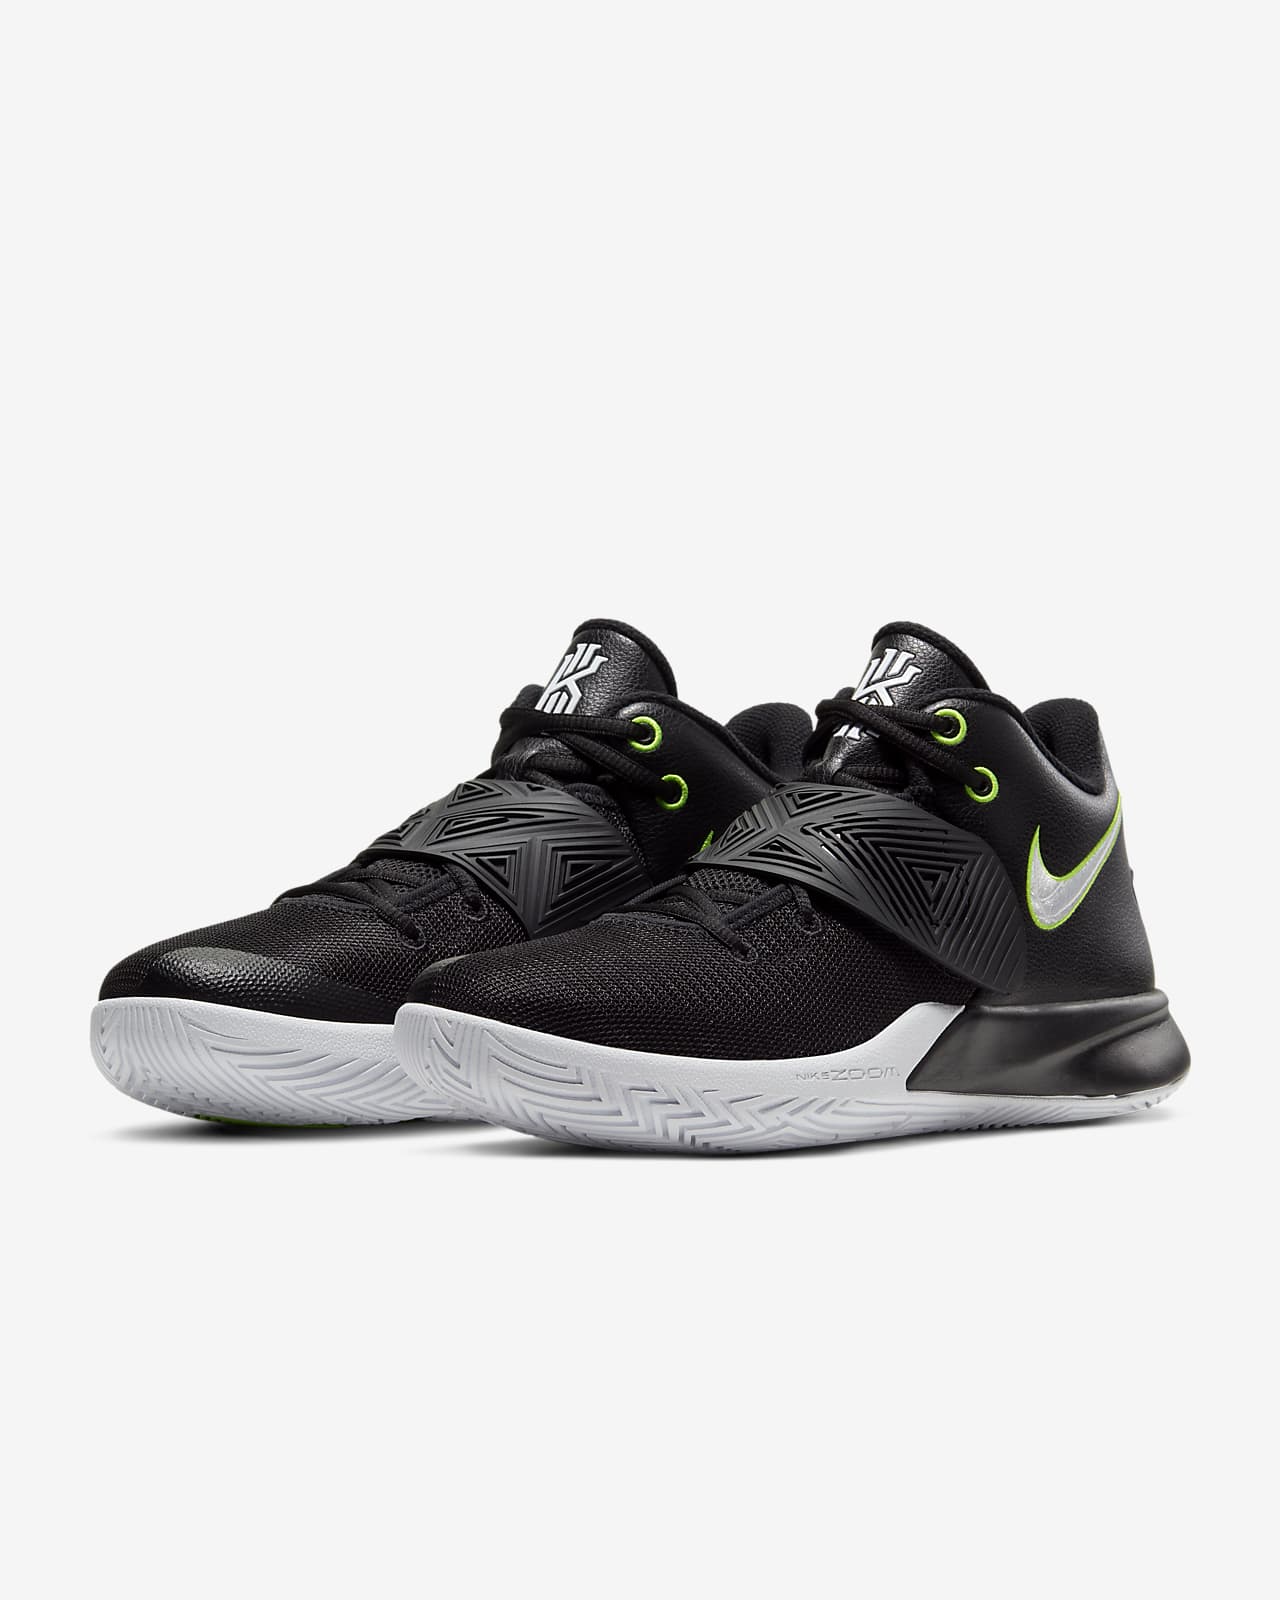 Kyrie Flytrap 3 Basketball Shoe. Nike DK